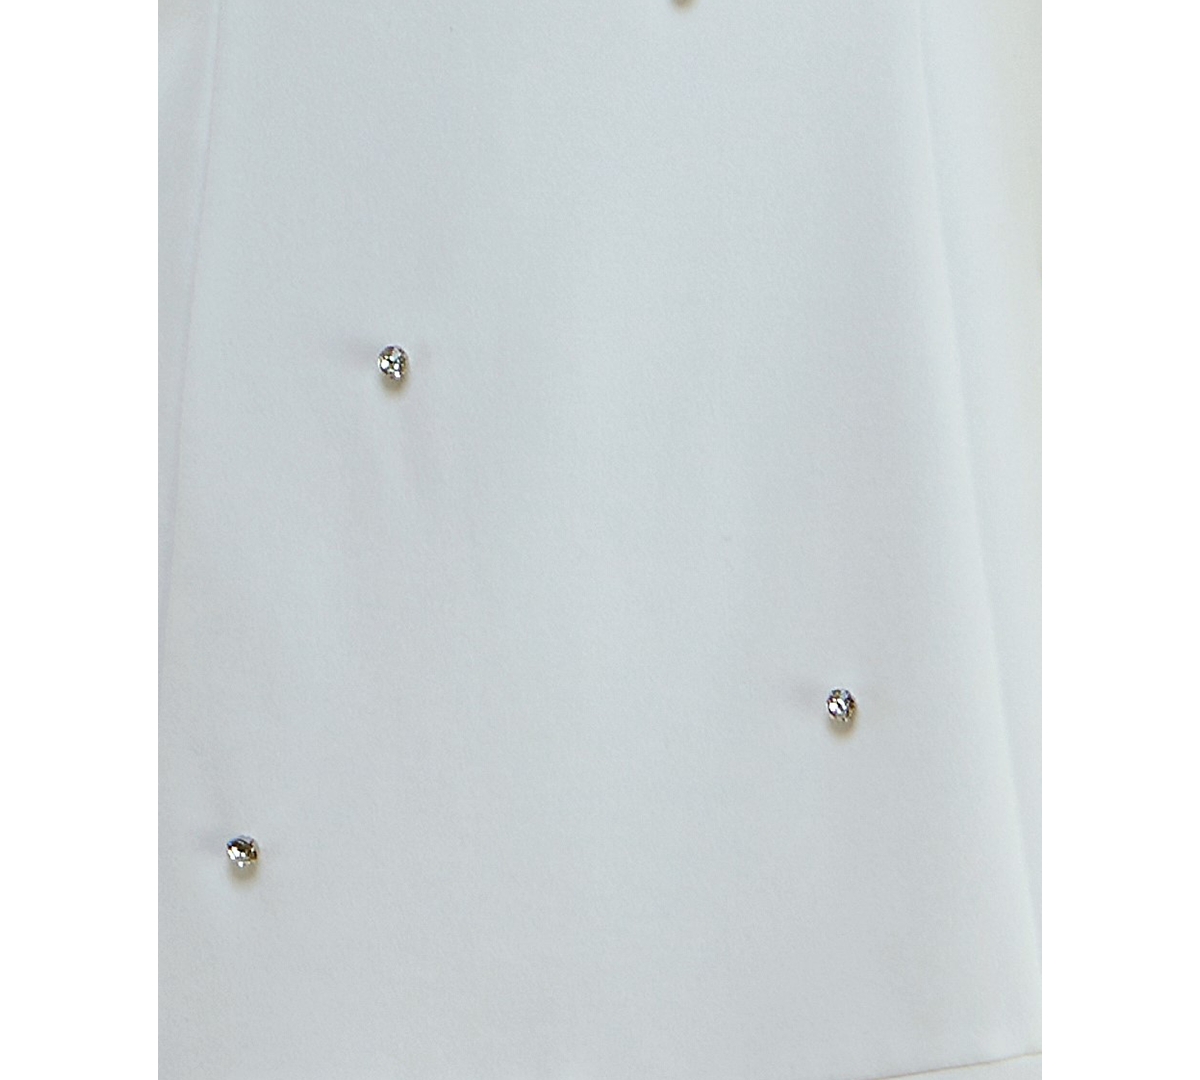 Shop Crystal Doll Juniors' Puff-sleeve Rhinestone-trim Dress In White